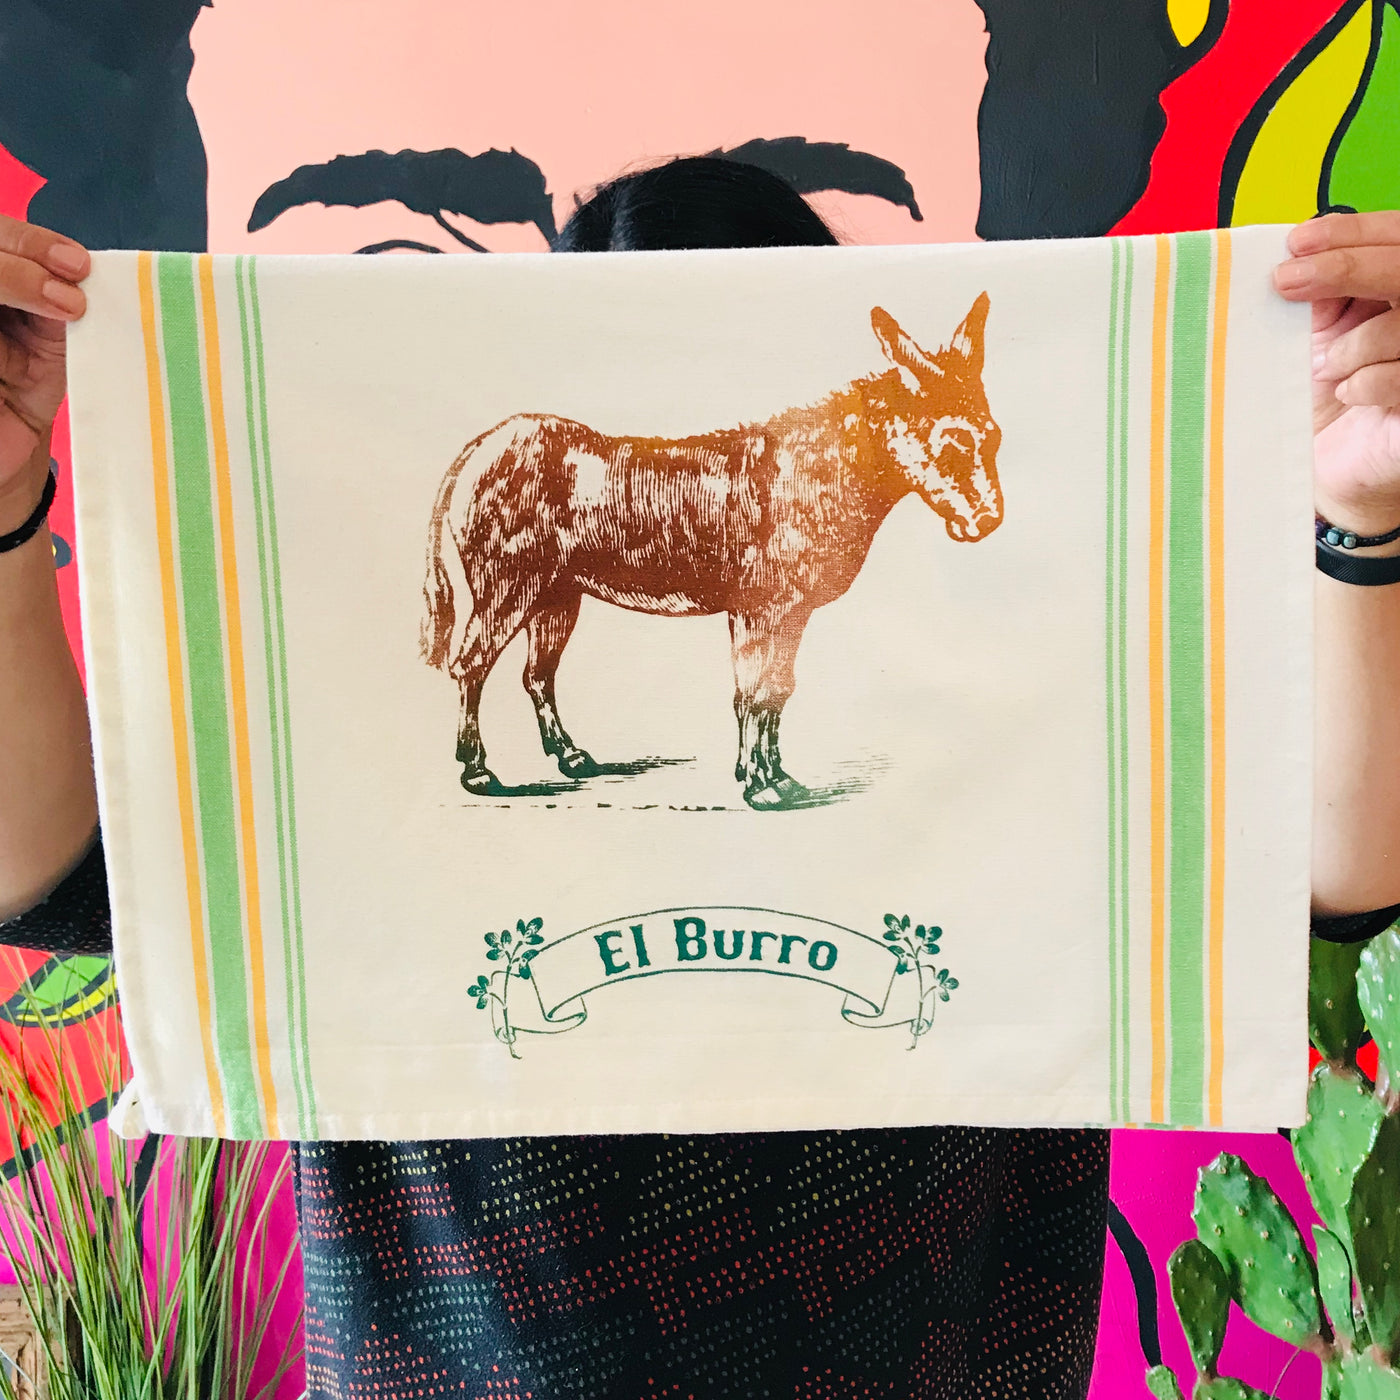 Loteria themed dish towels of a donkey/el burro